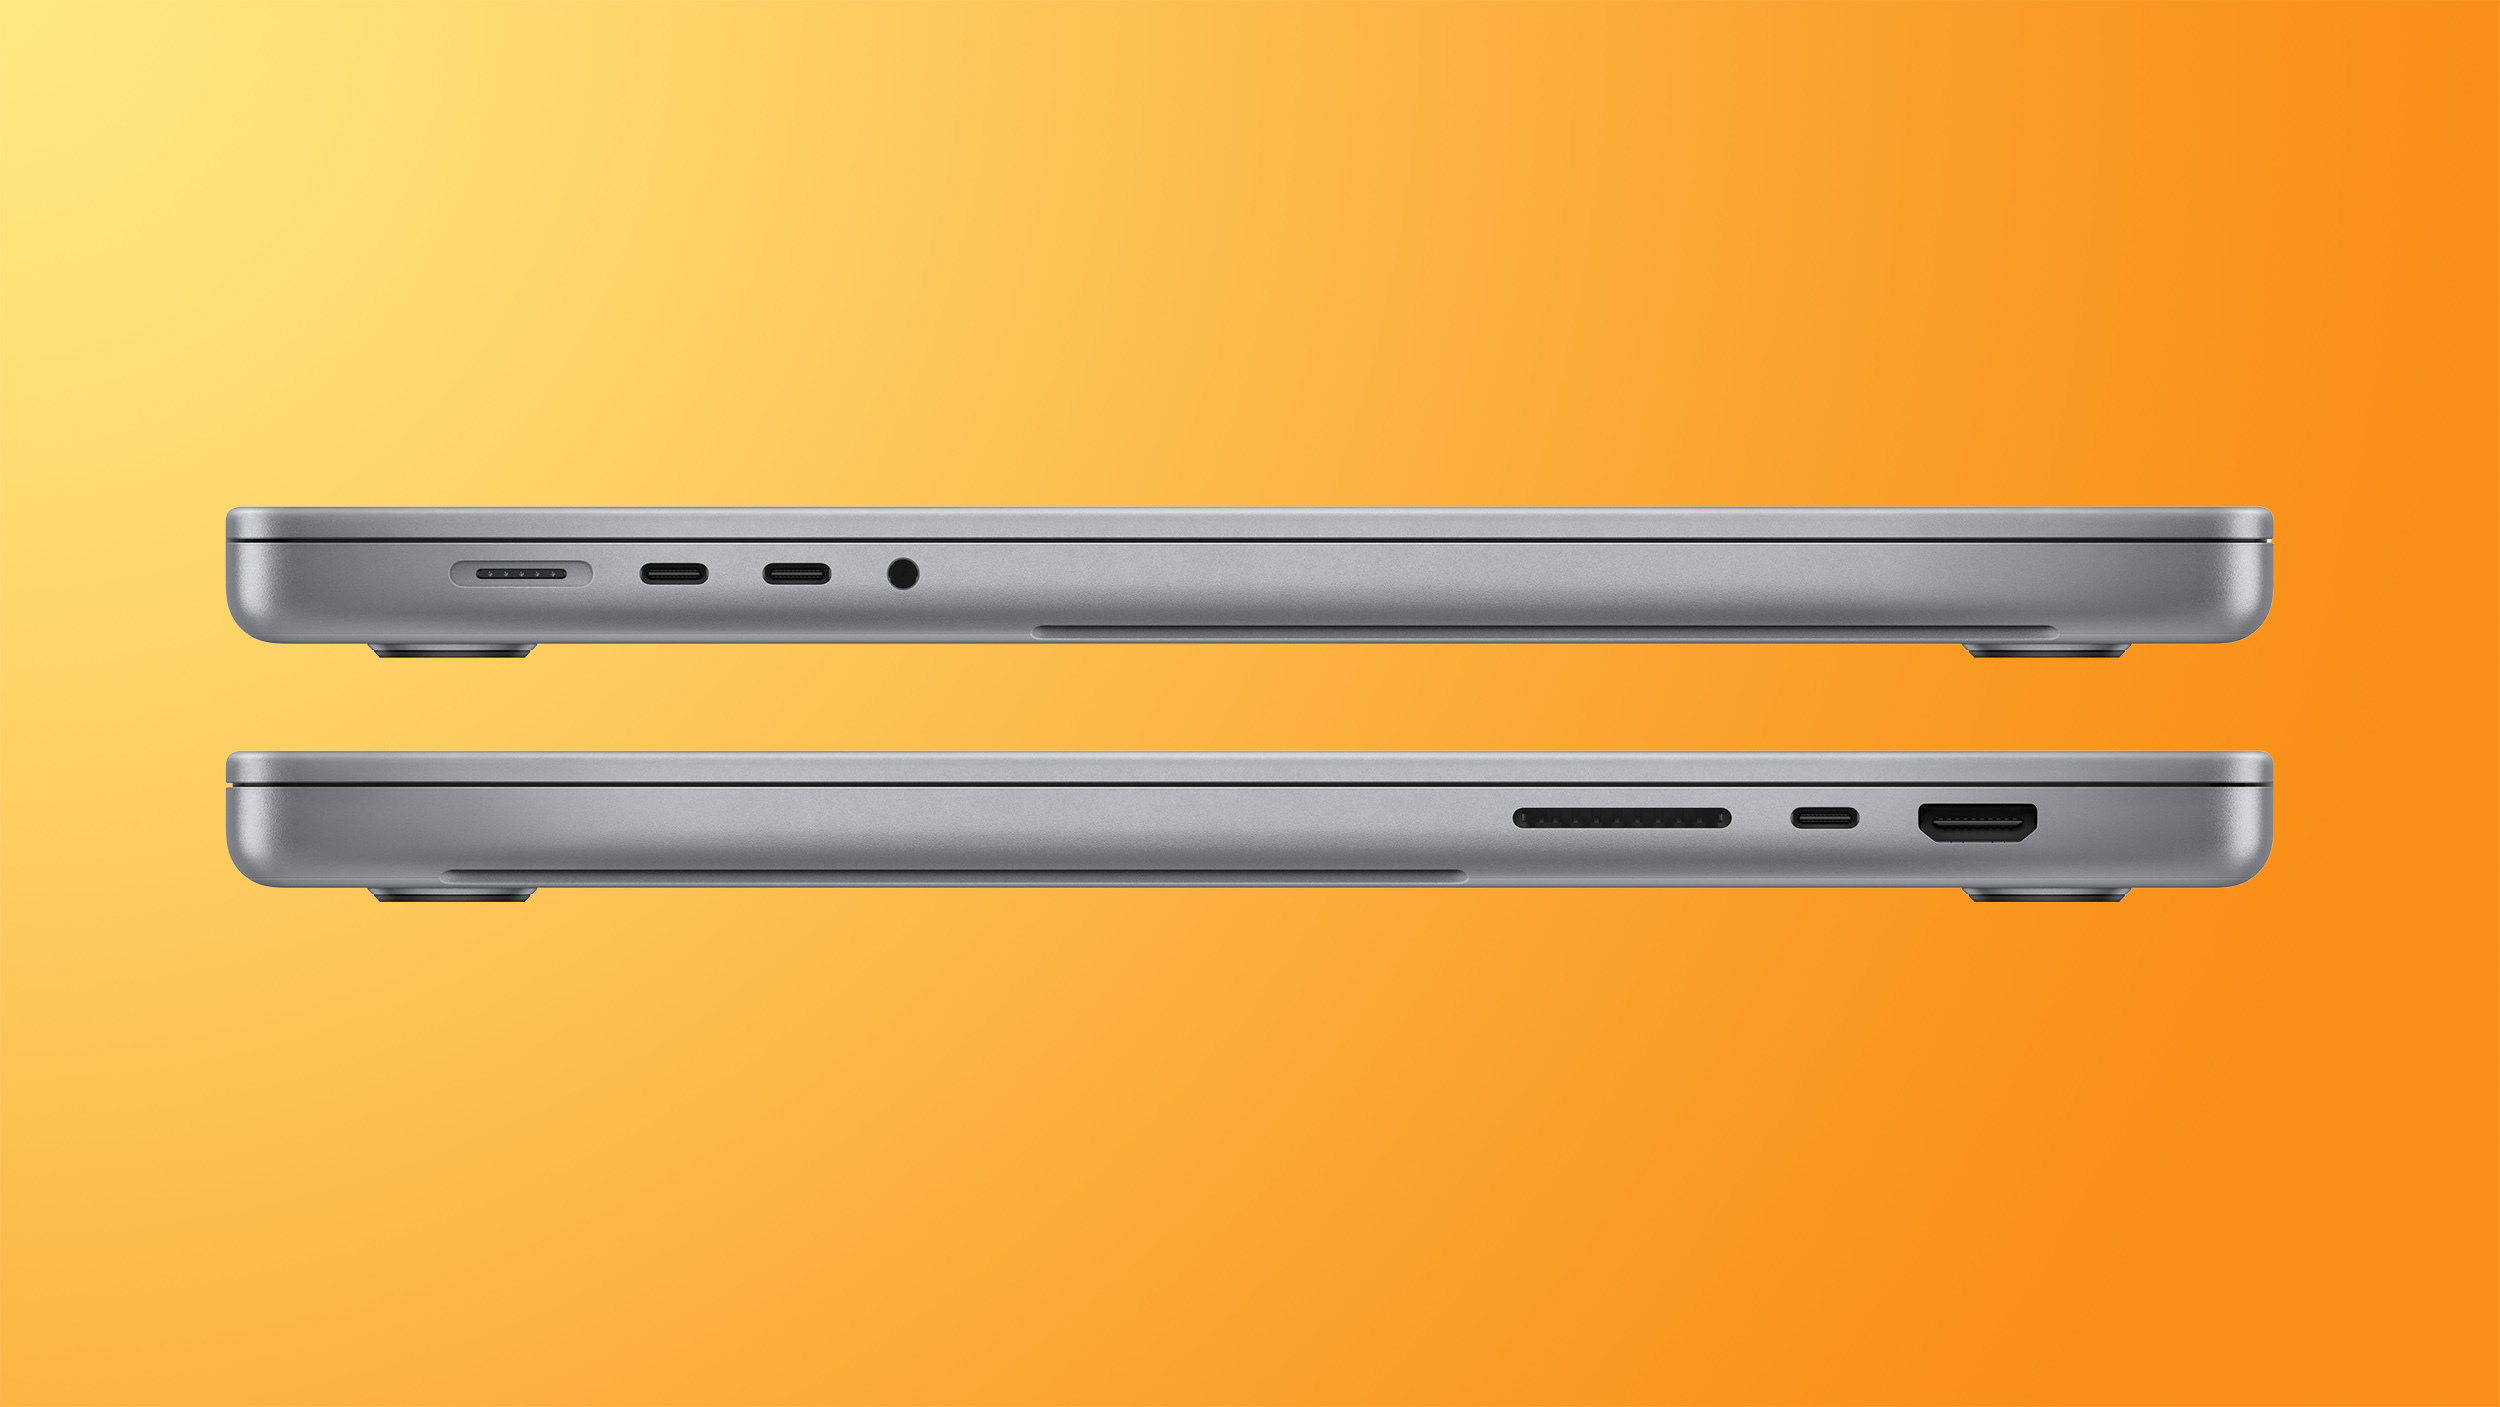 New MacBook Pro Models Feature HDMI 2.1 Port Instead of HDMI 2.0